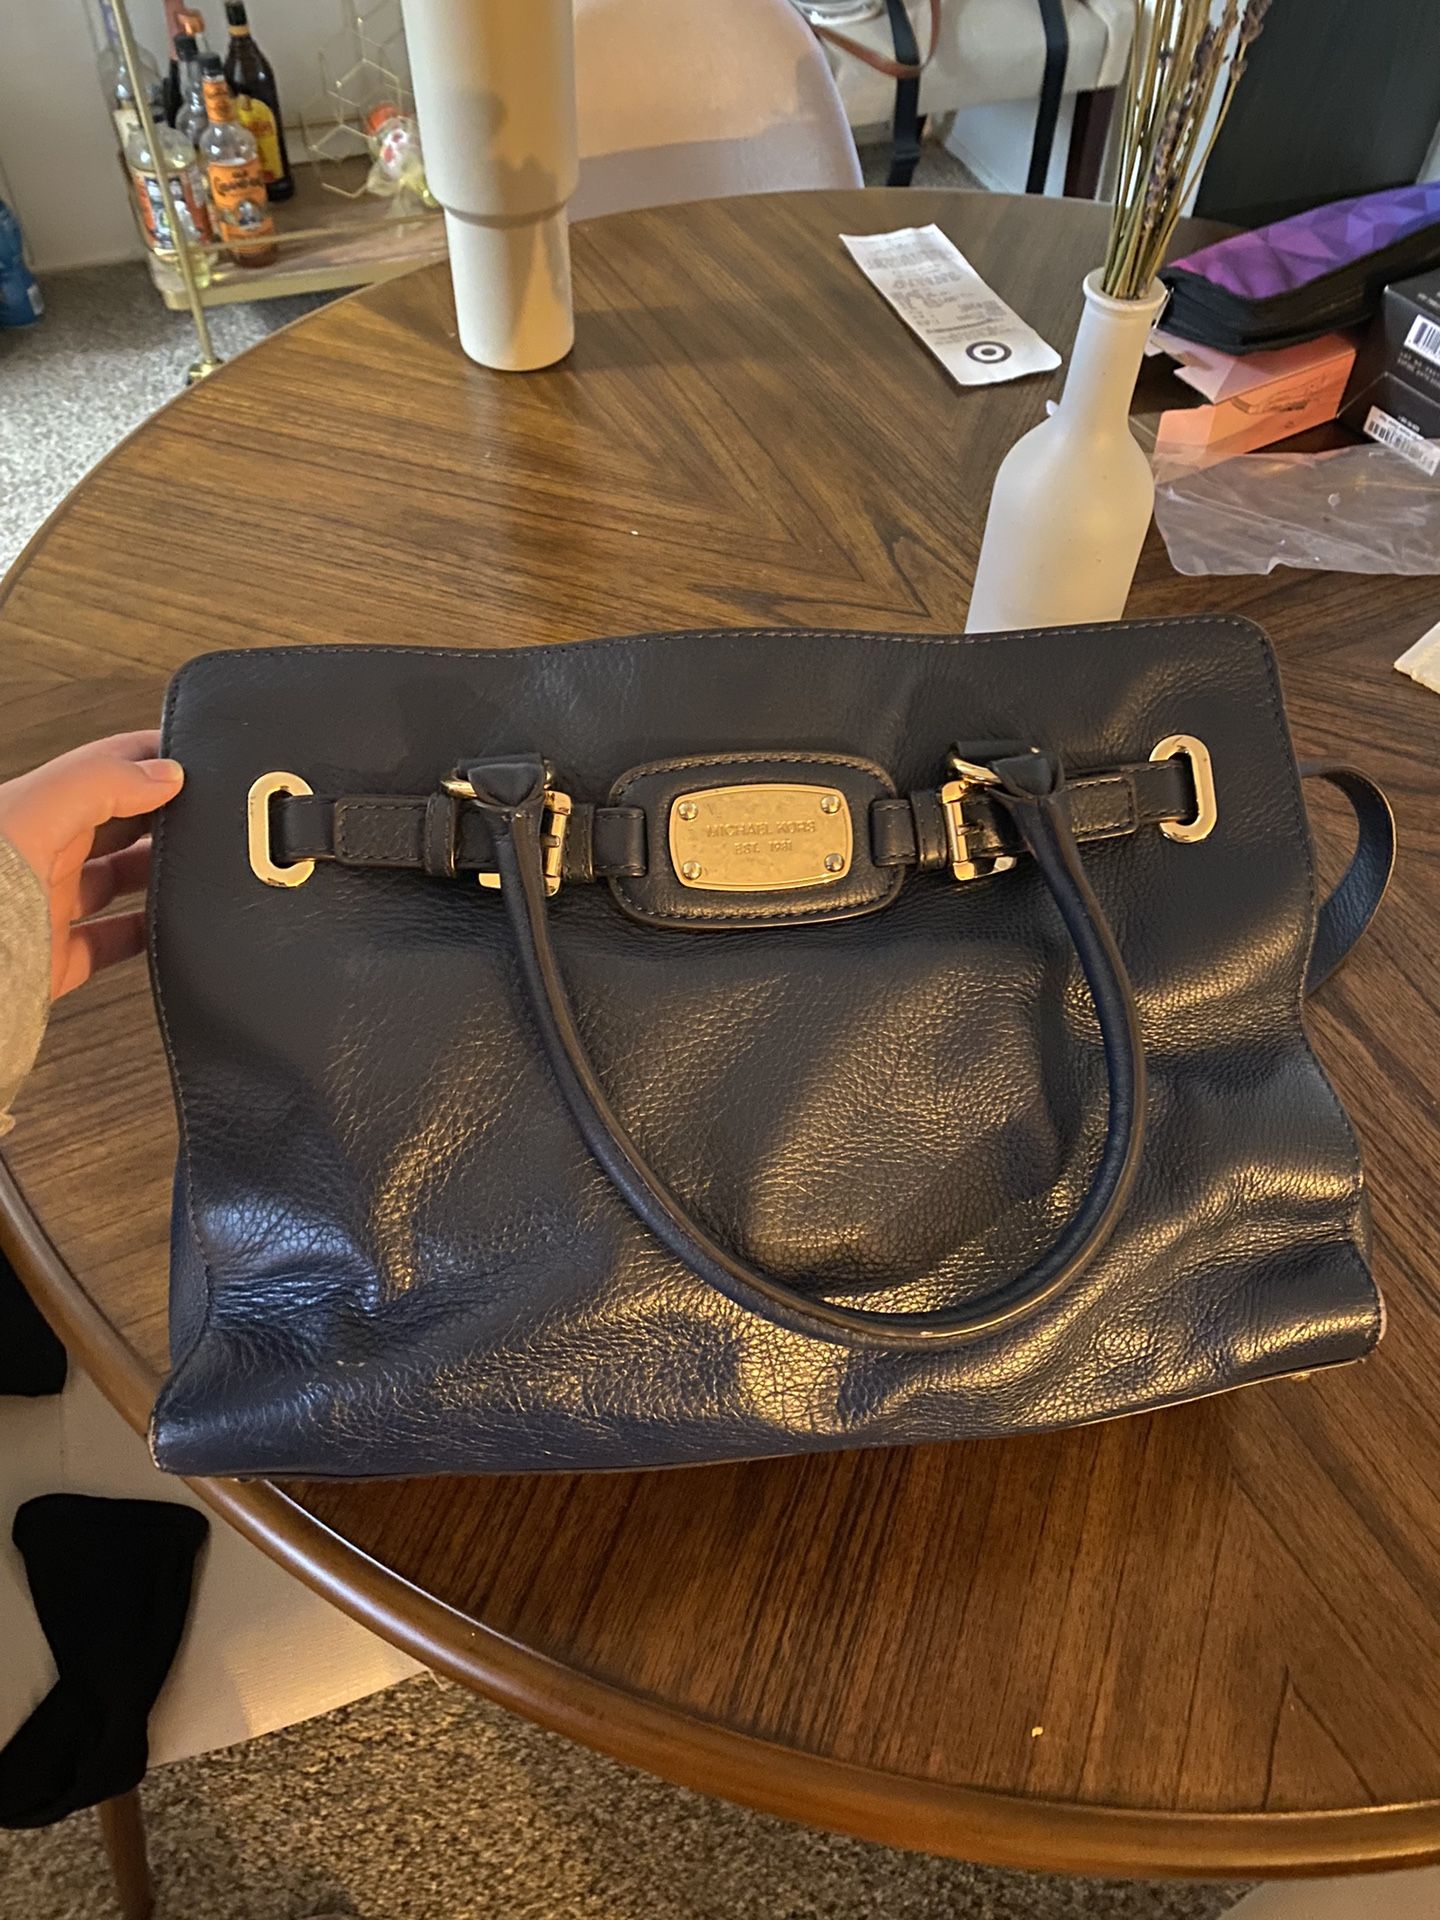 Blue Michael Kors purse